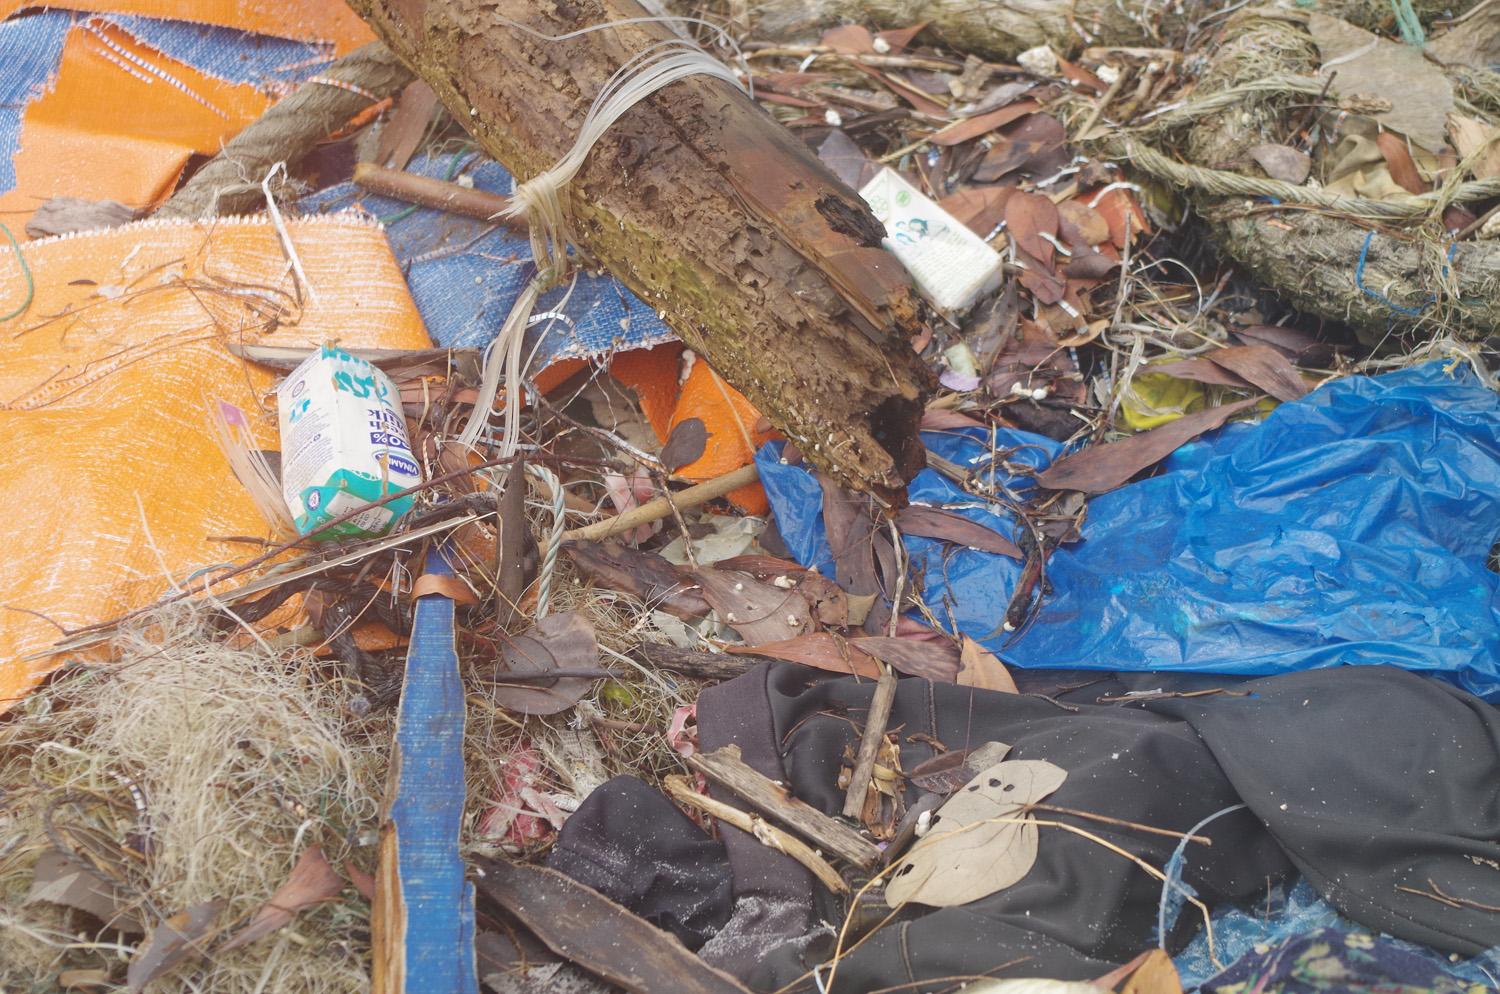 Plastic waste found on the beach in Minh Chau 